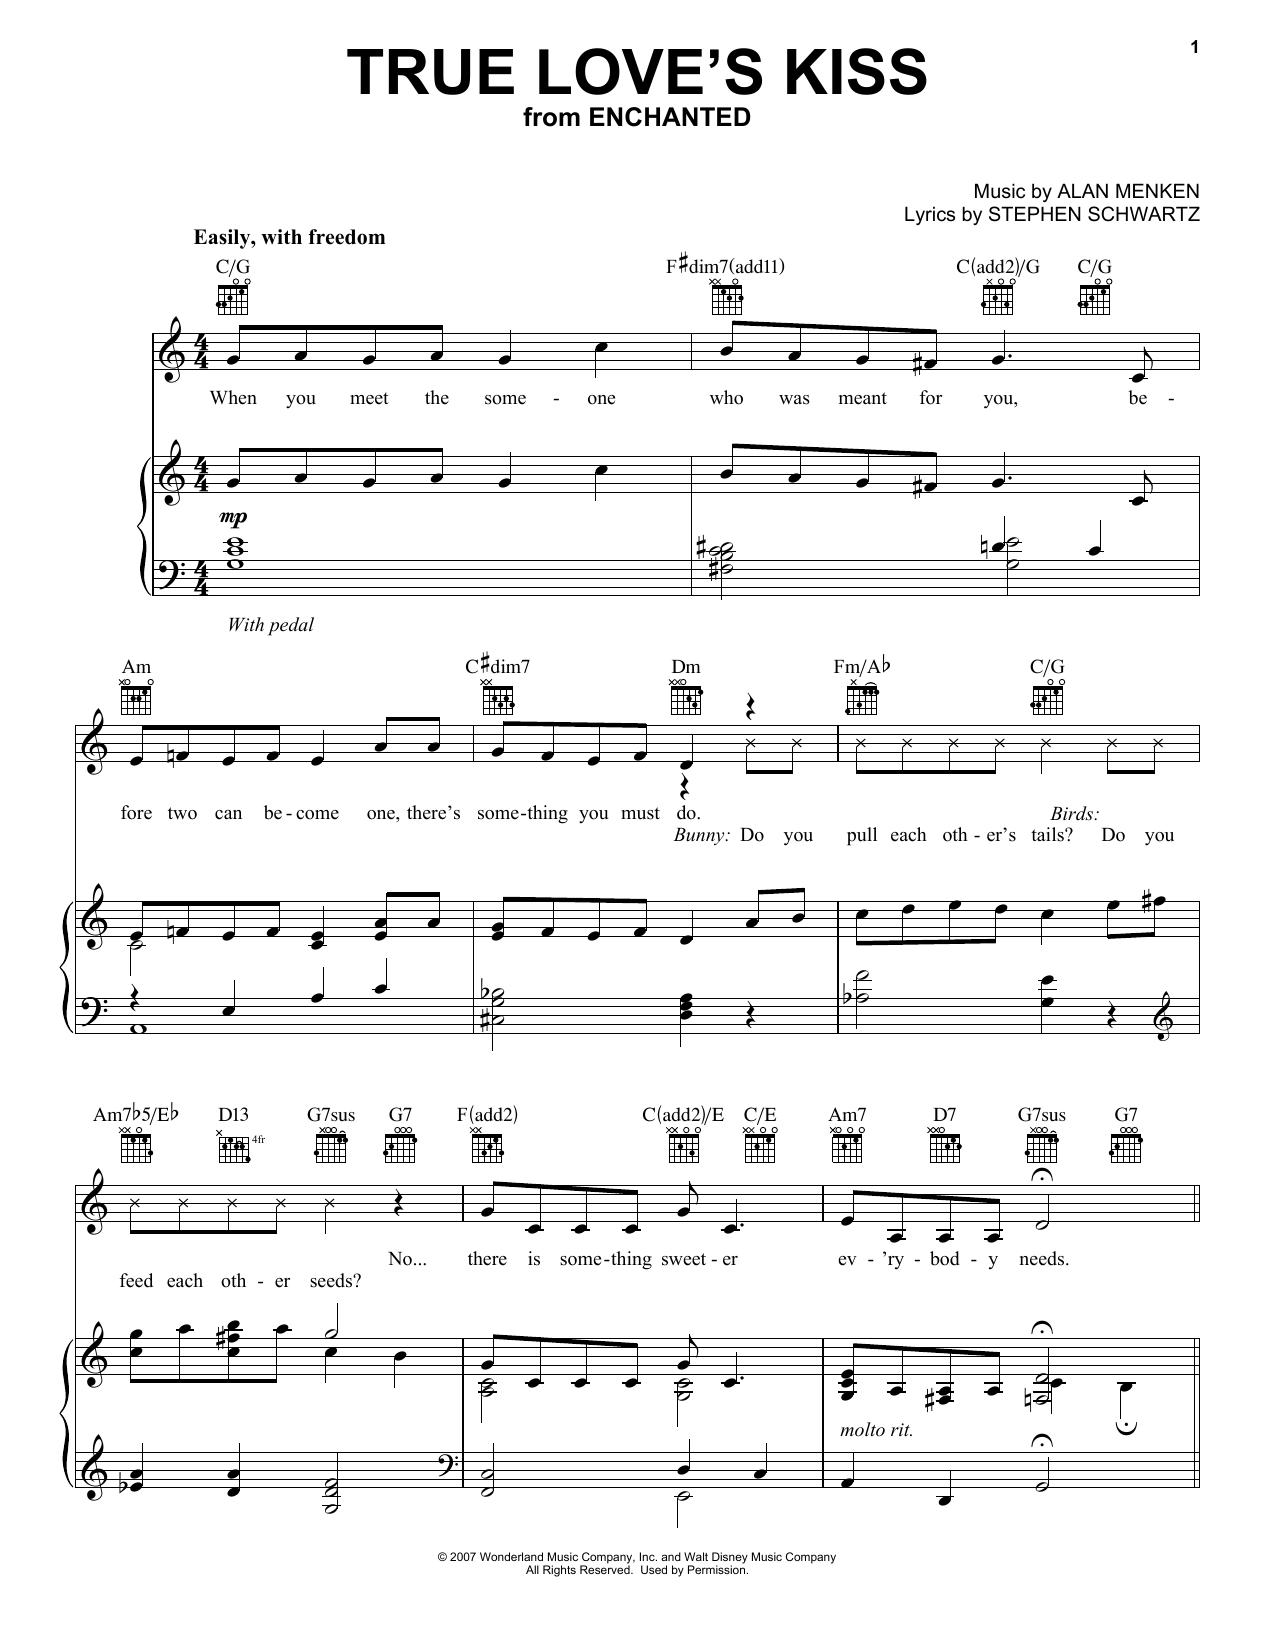 Download Alan Menken True Love's Kiss Sheet Music and learn how to play Trombone PDF digital score in minutes